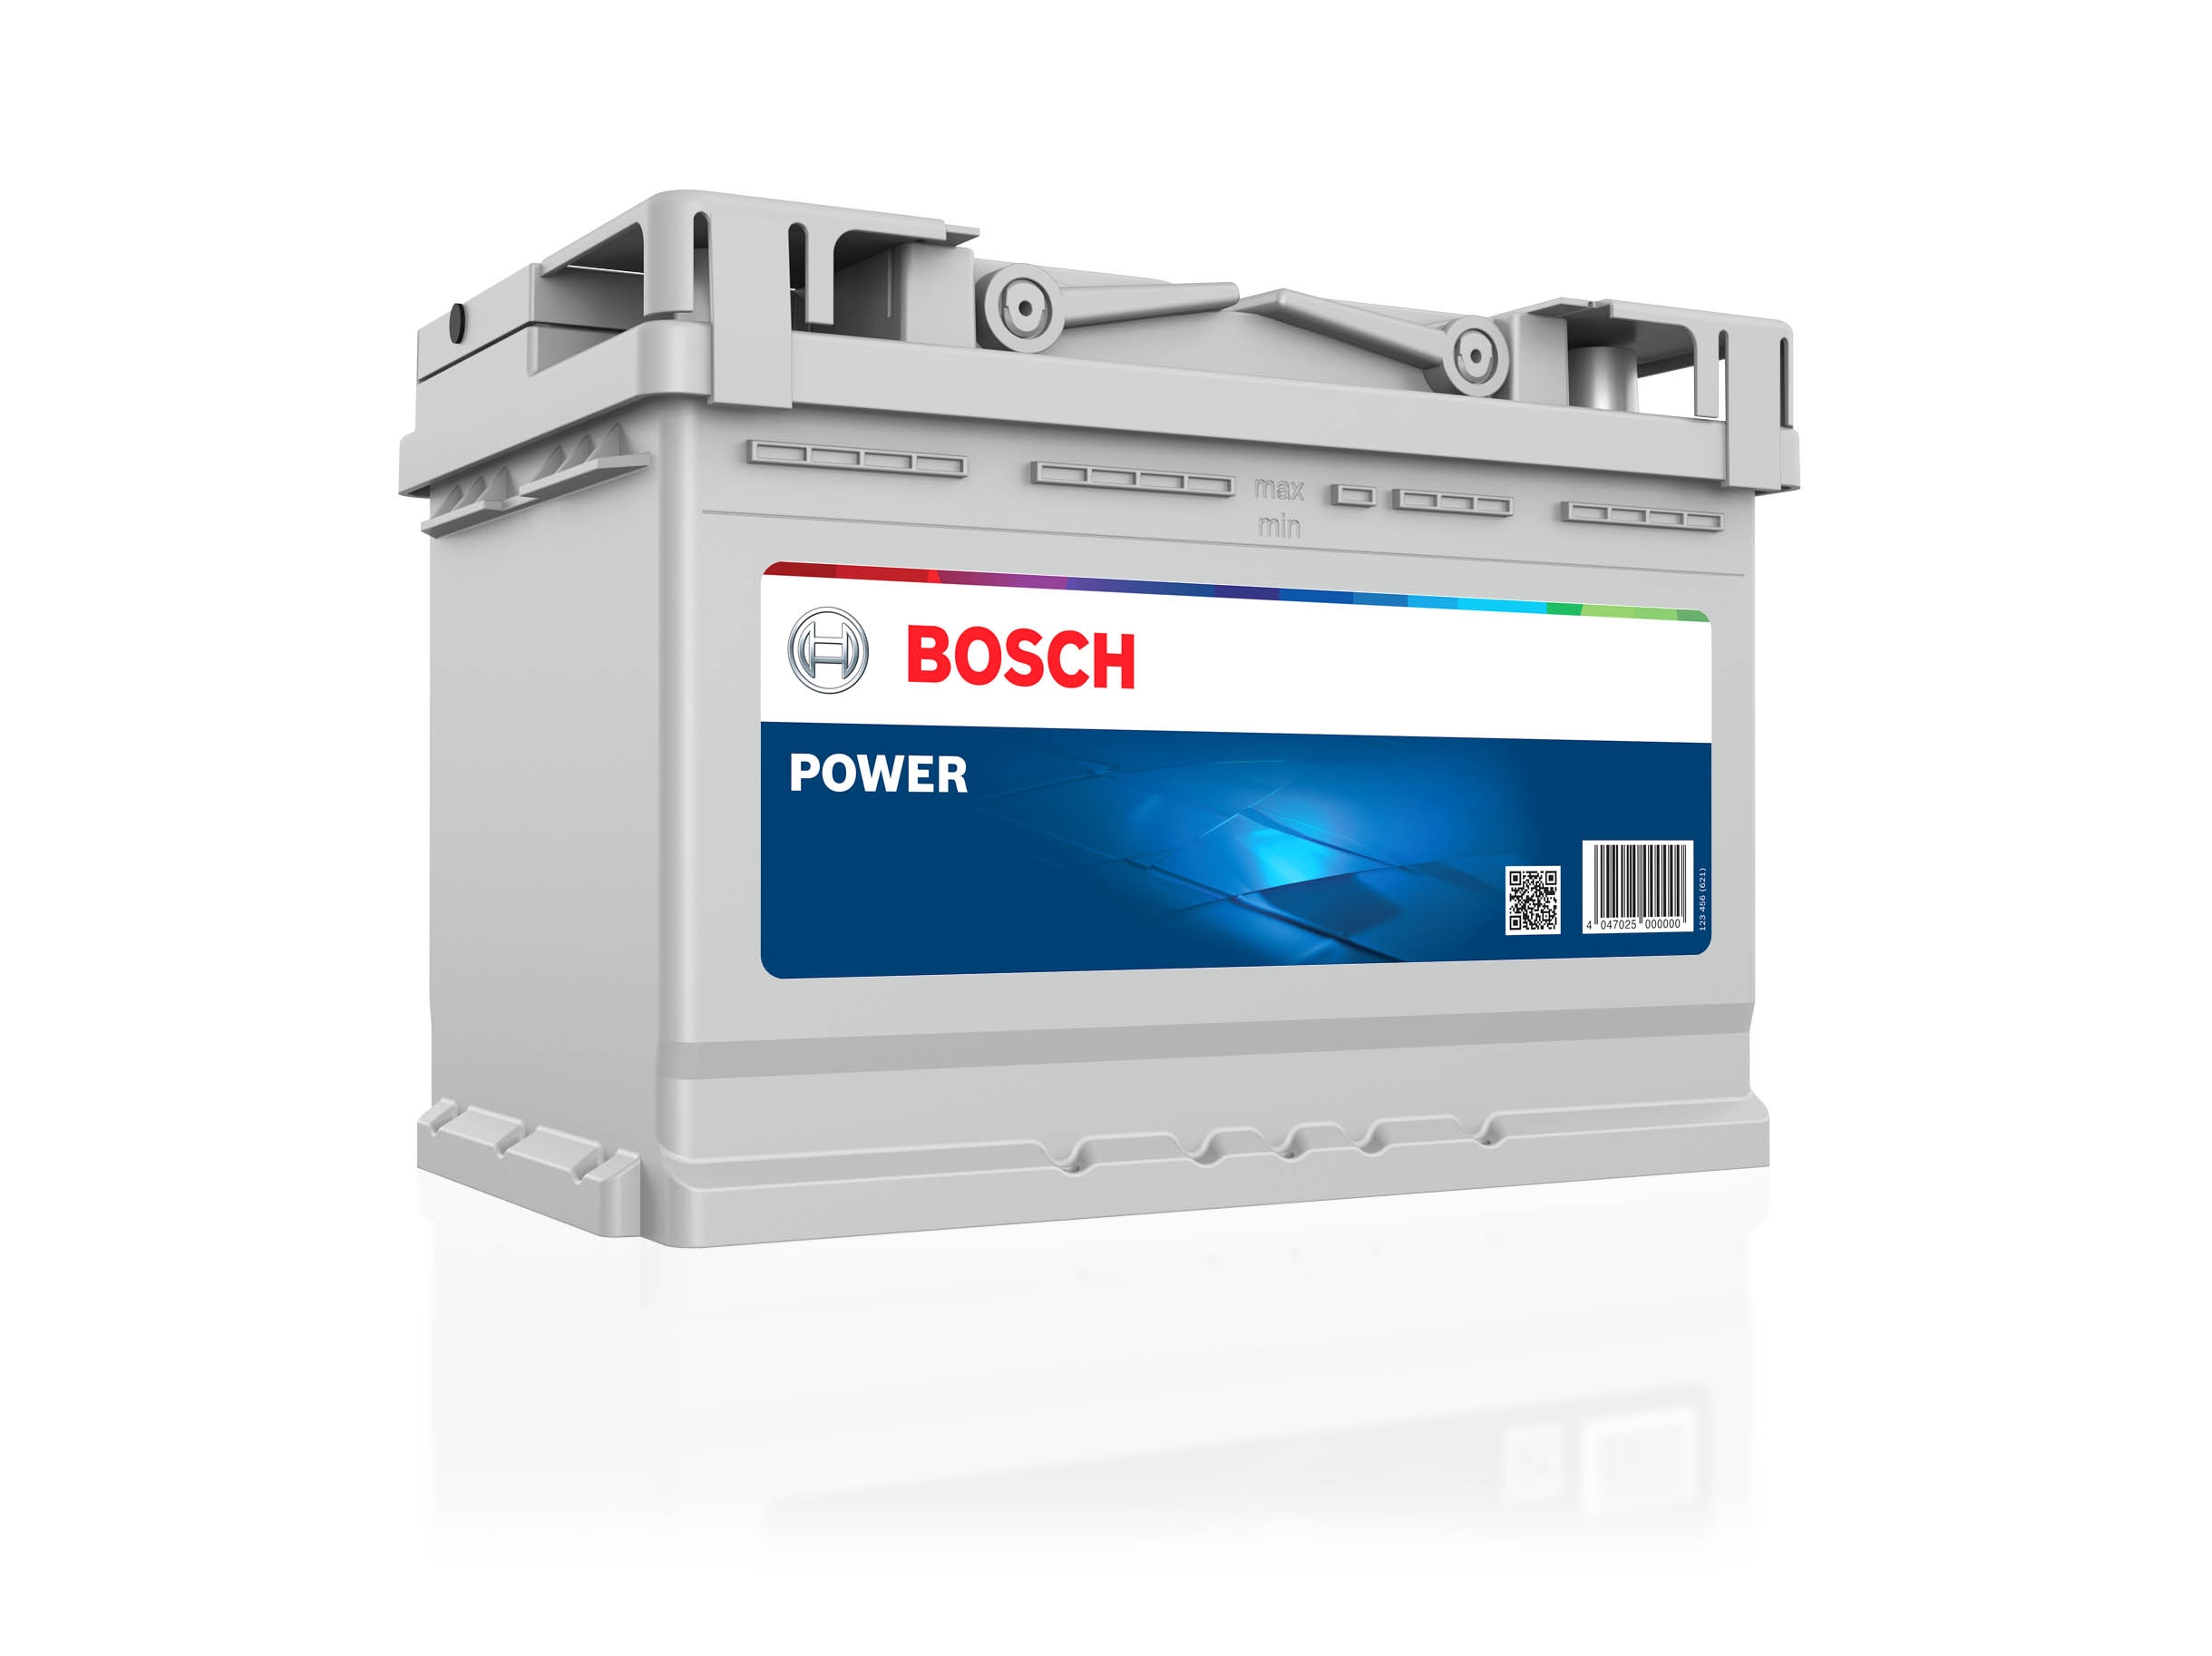 Piese Auto Opel Baterie auto Bosch POWER 55Ah 460A Revizie Masina